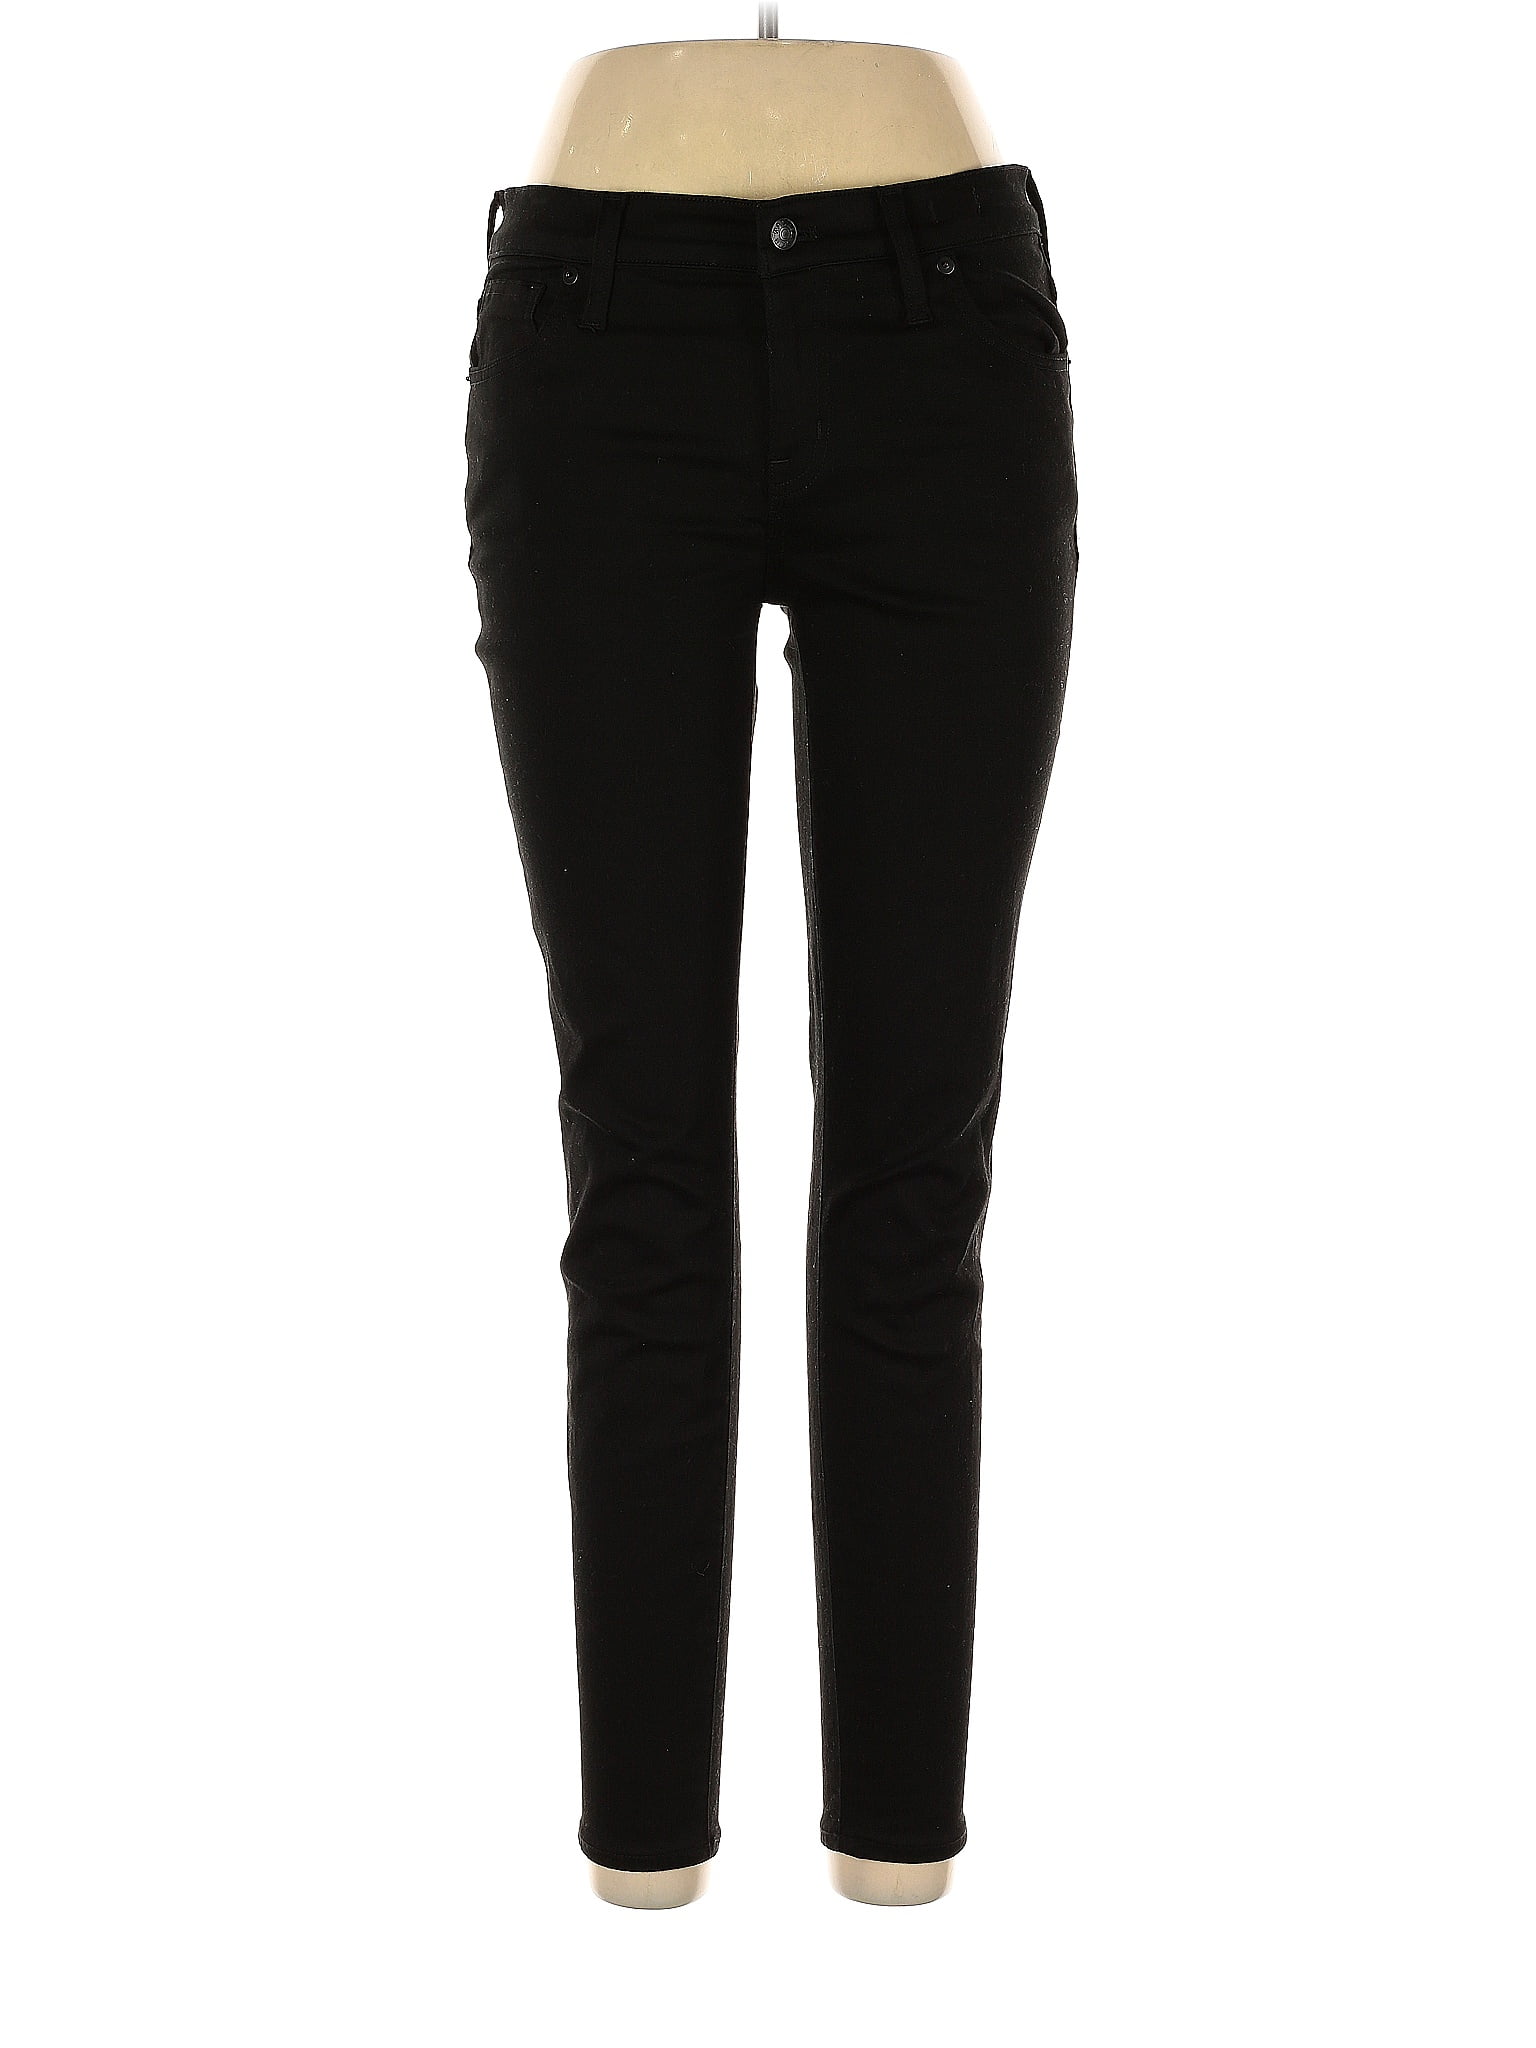 Madewell Solid Black Jeans 30 Waist - 69% off | thredUP